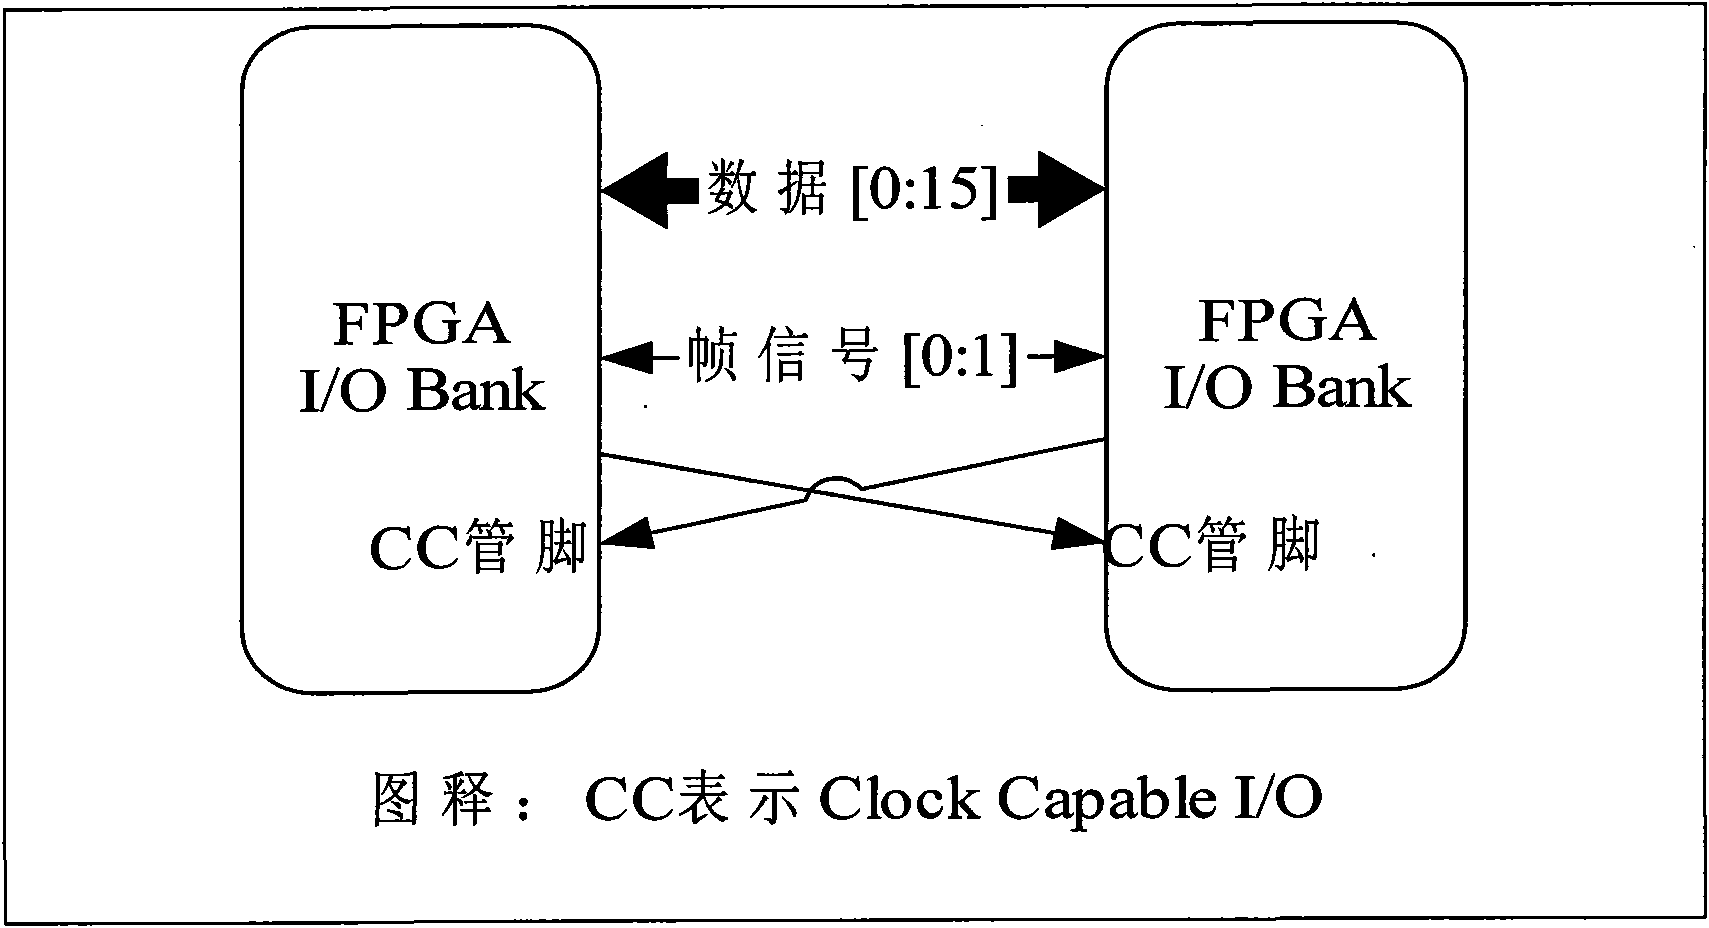 FPGA array processing board